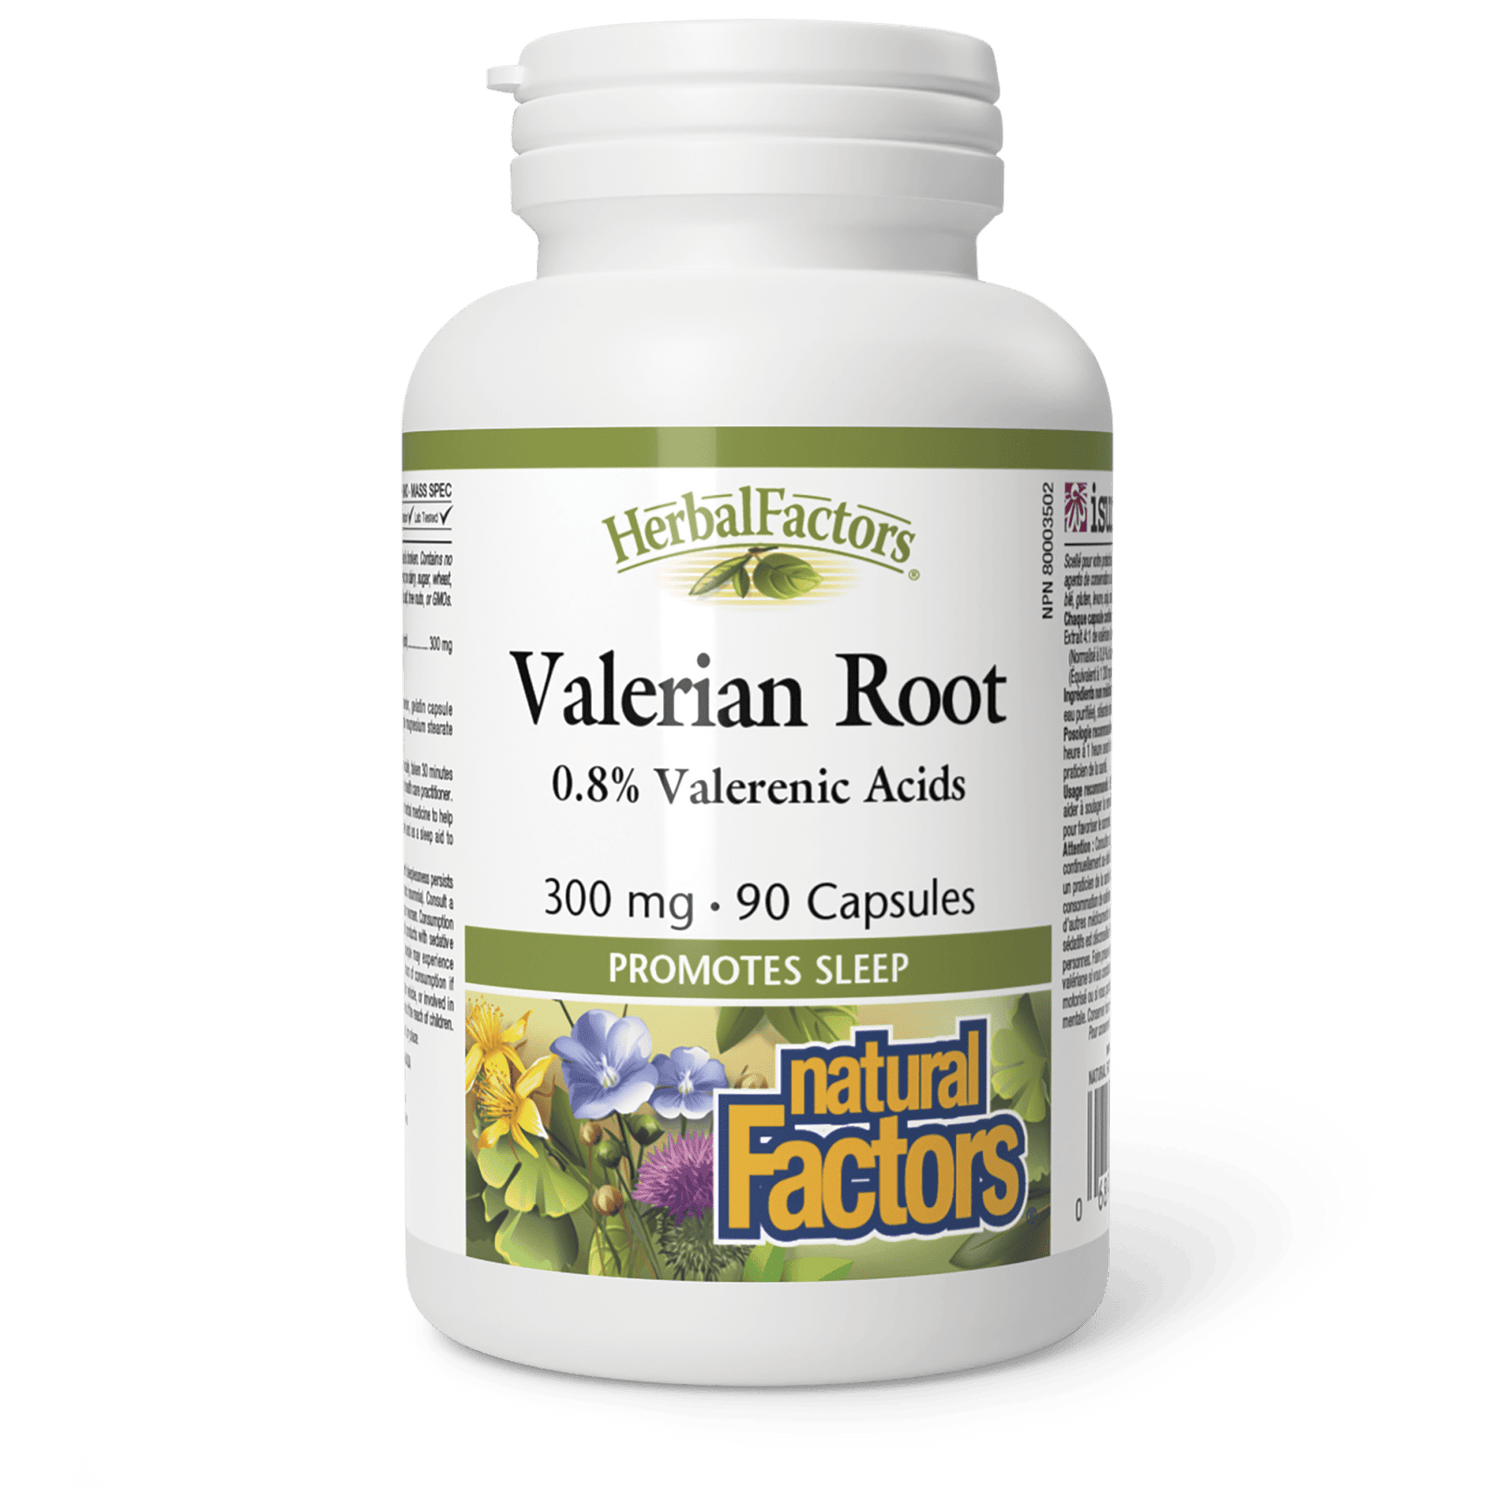 Valerian Root 300 mg, HerbalFactors, Natural Factors|v|image|4565